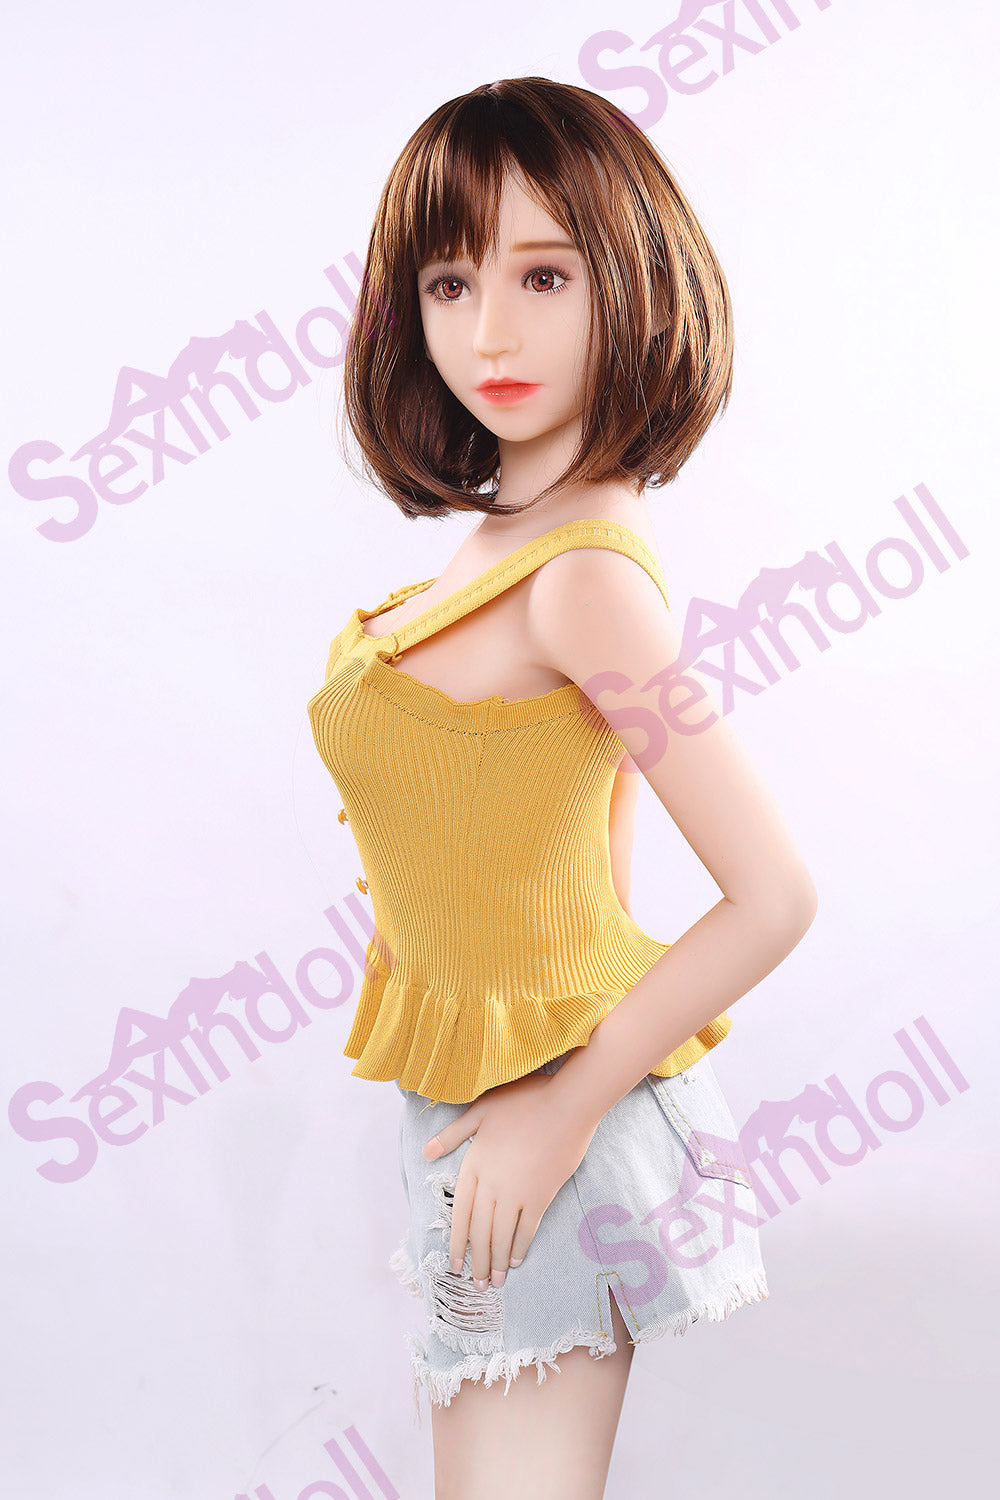 Summer - Electronic Hip Sex Robot Doll 5ft 2 (158cm) - Sexindoll